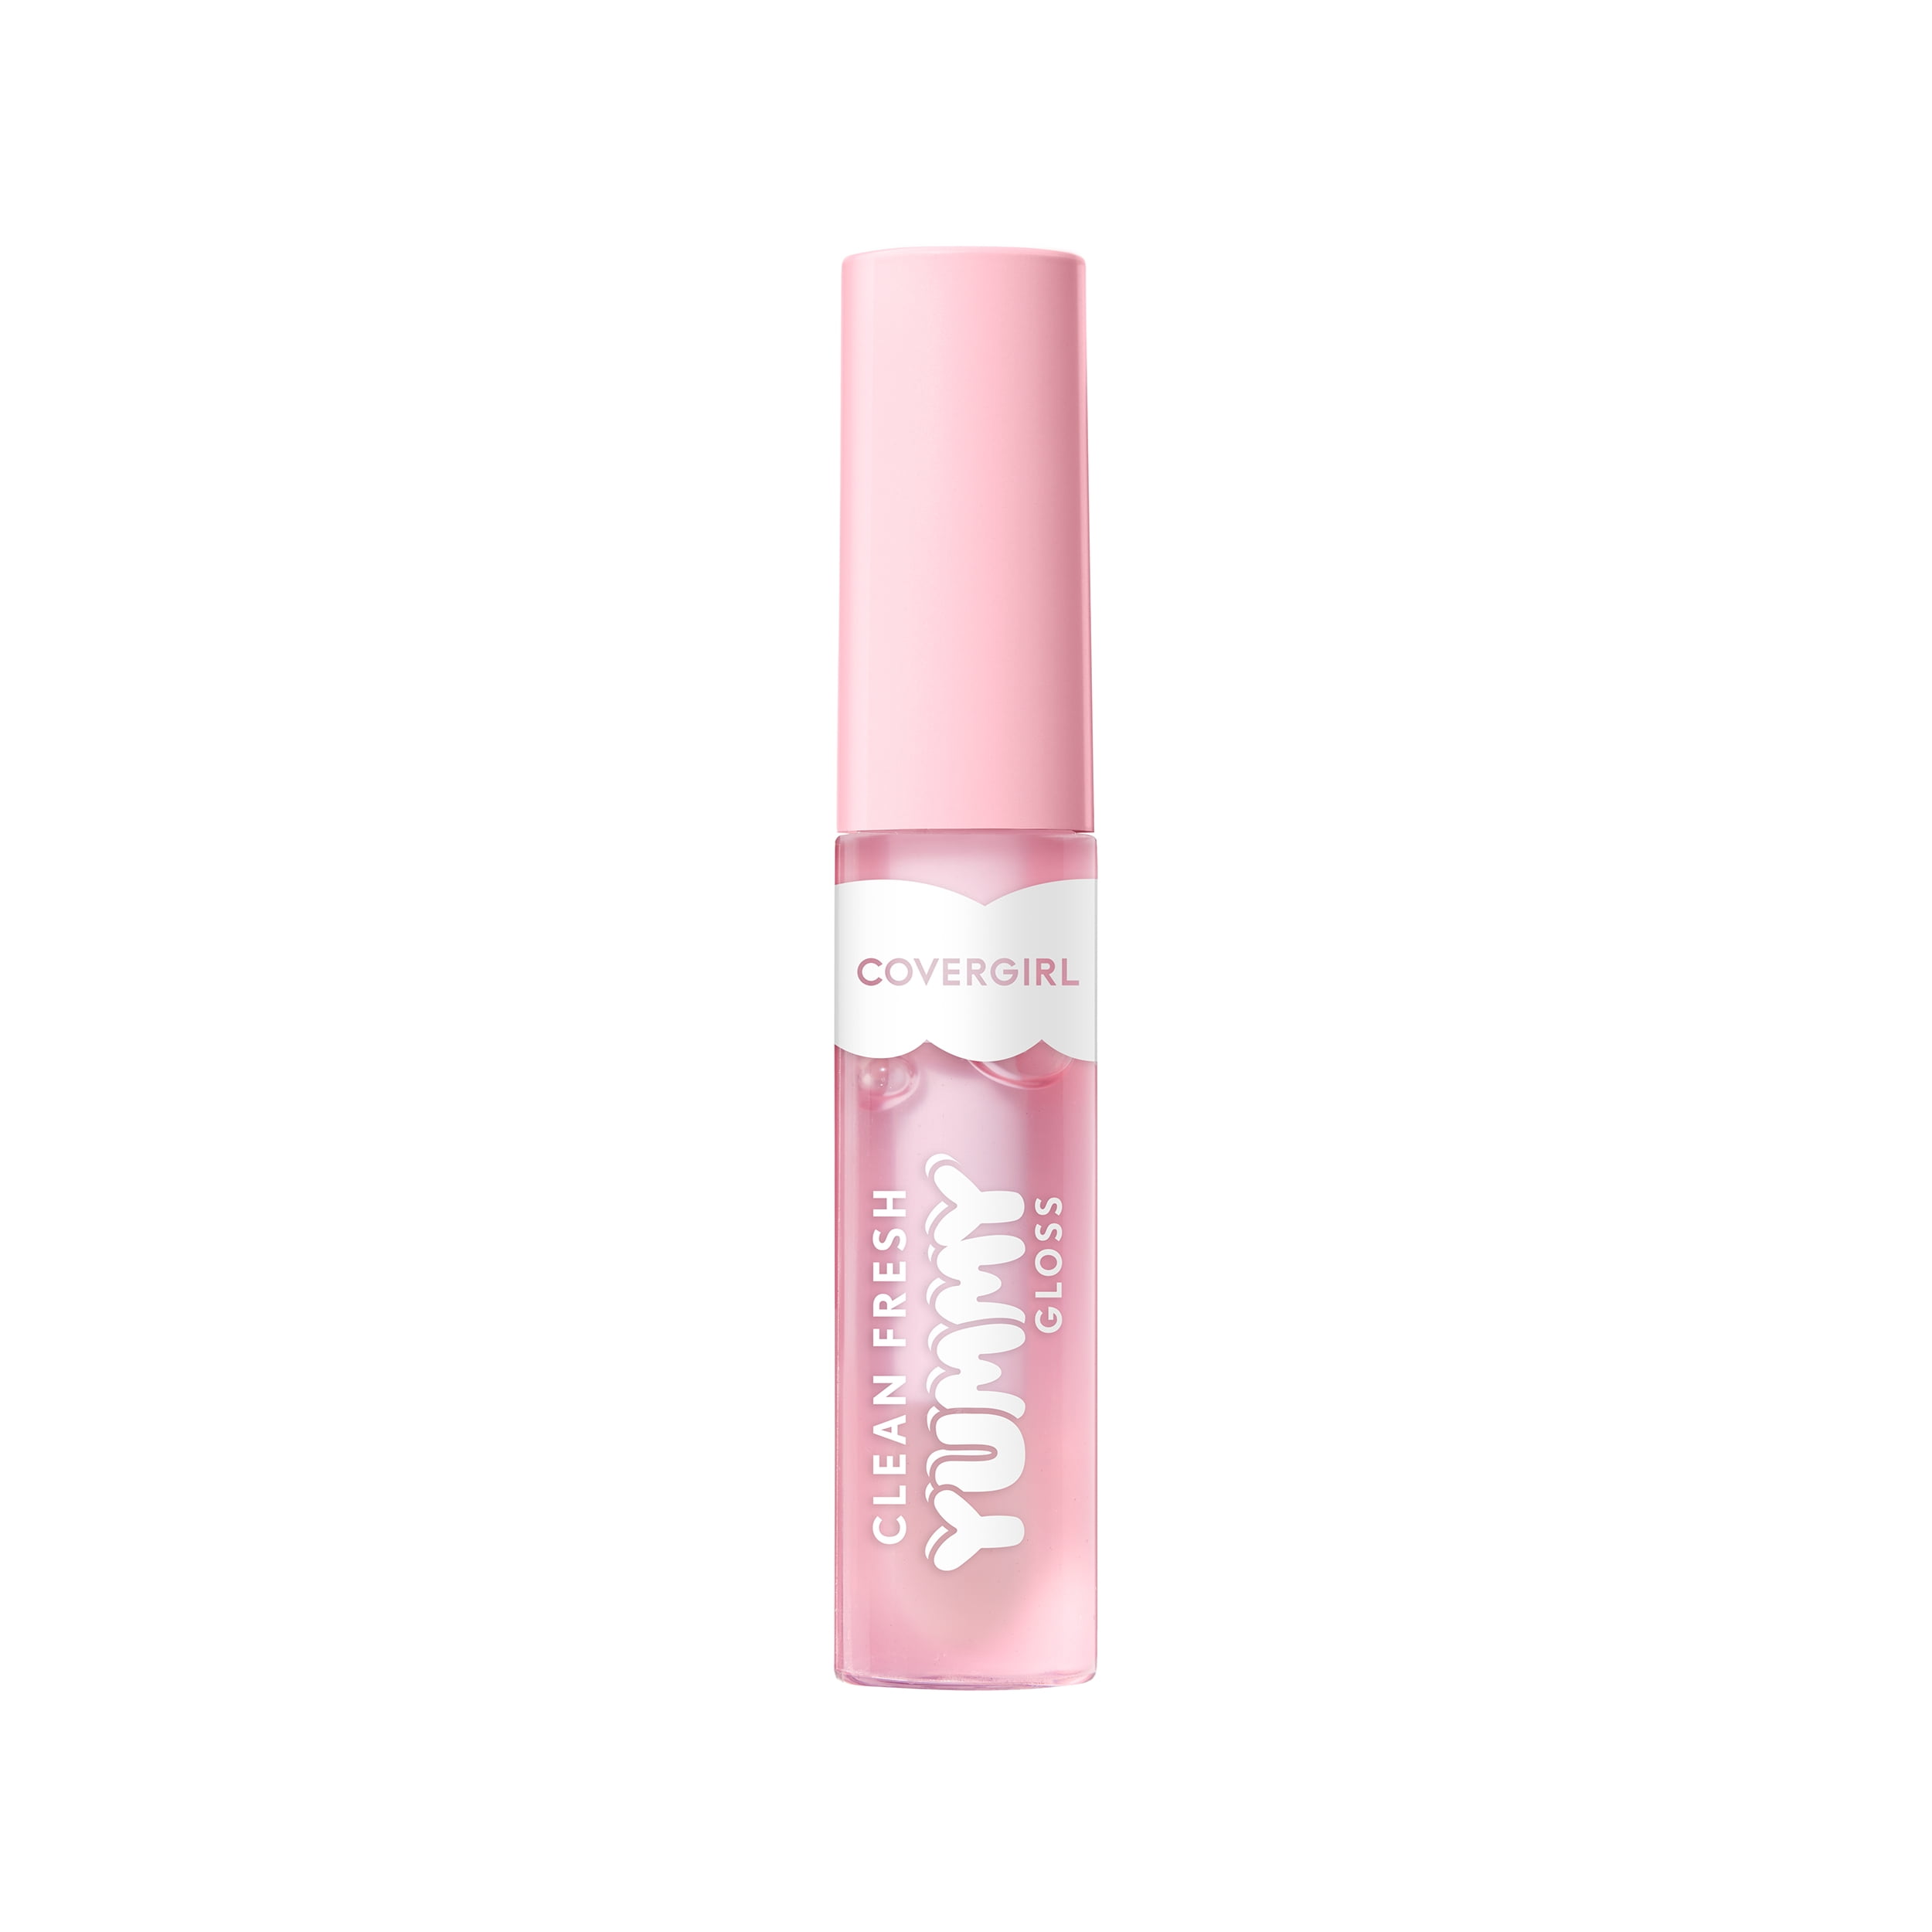 COVERGIRL Clean Fresh Yummy Lip Gloss, 100 Lets Get Fizzical, 0.33 fl oz